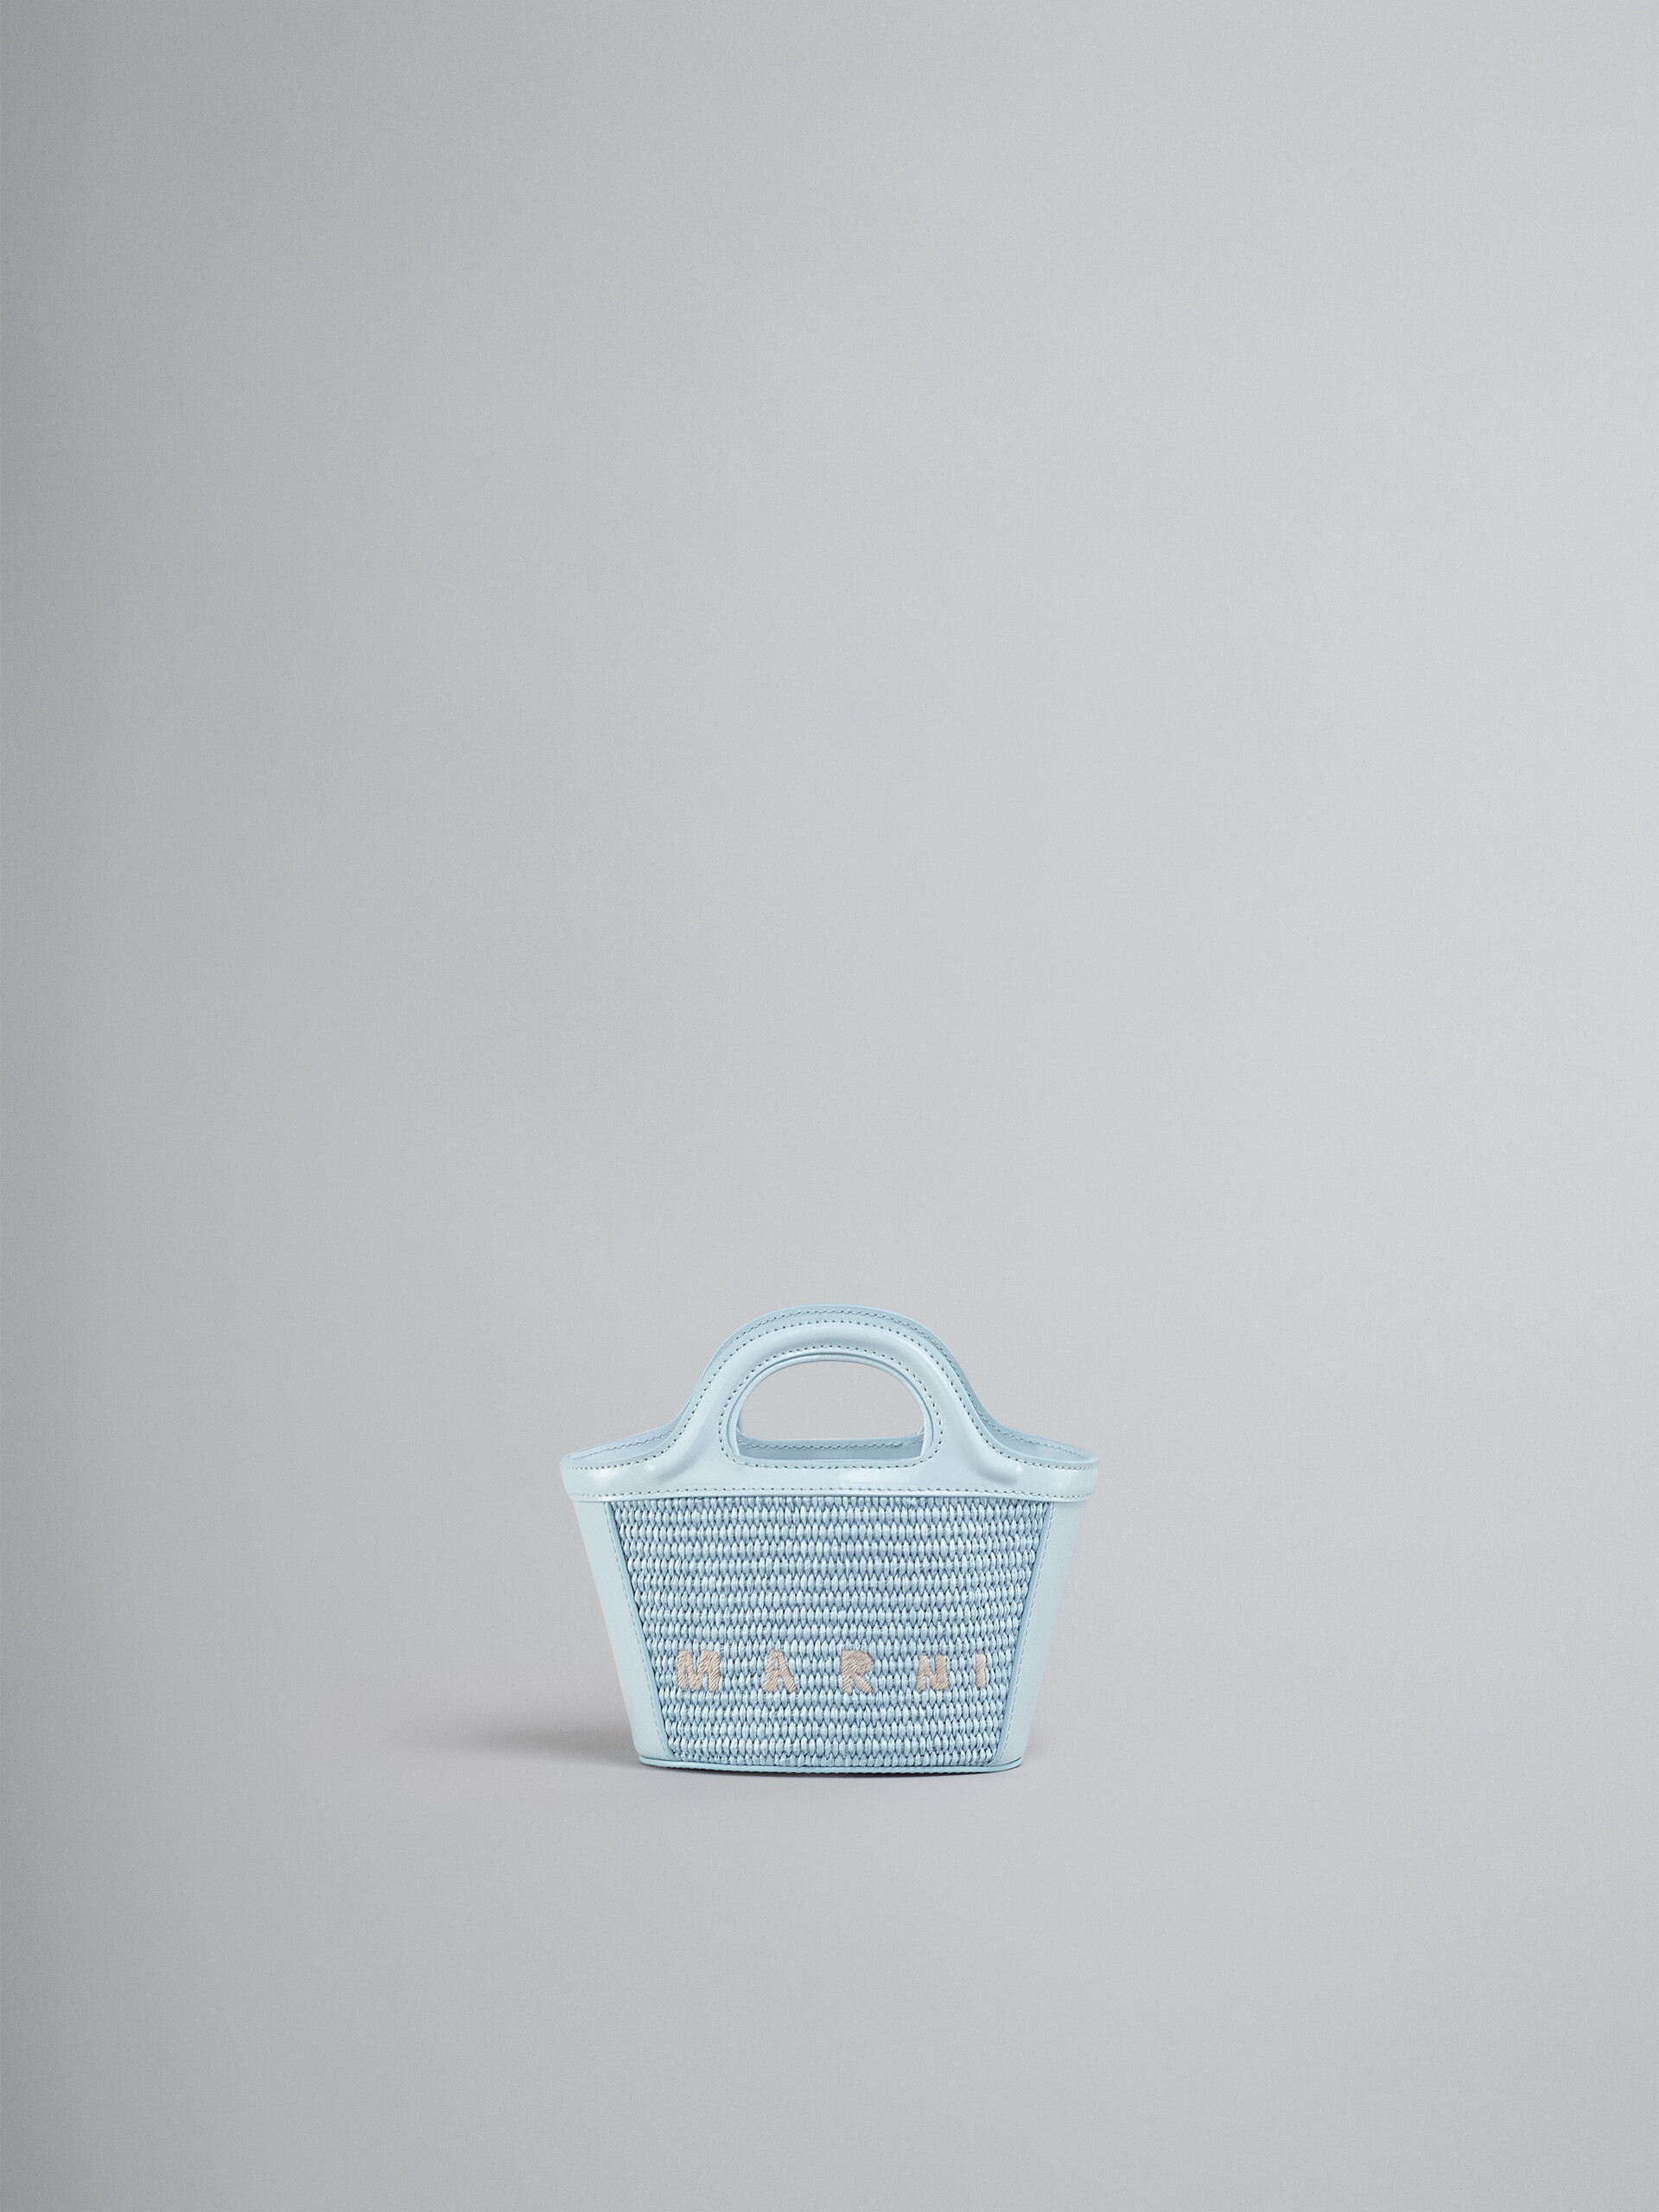 Tropicalia Micro Bag in light blue leather and raffia - Handbag - Image 1